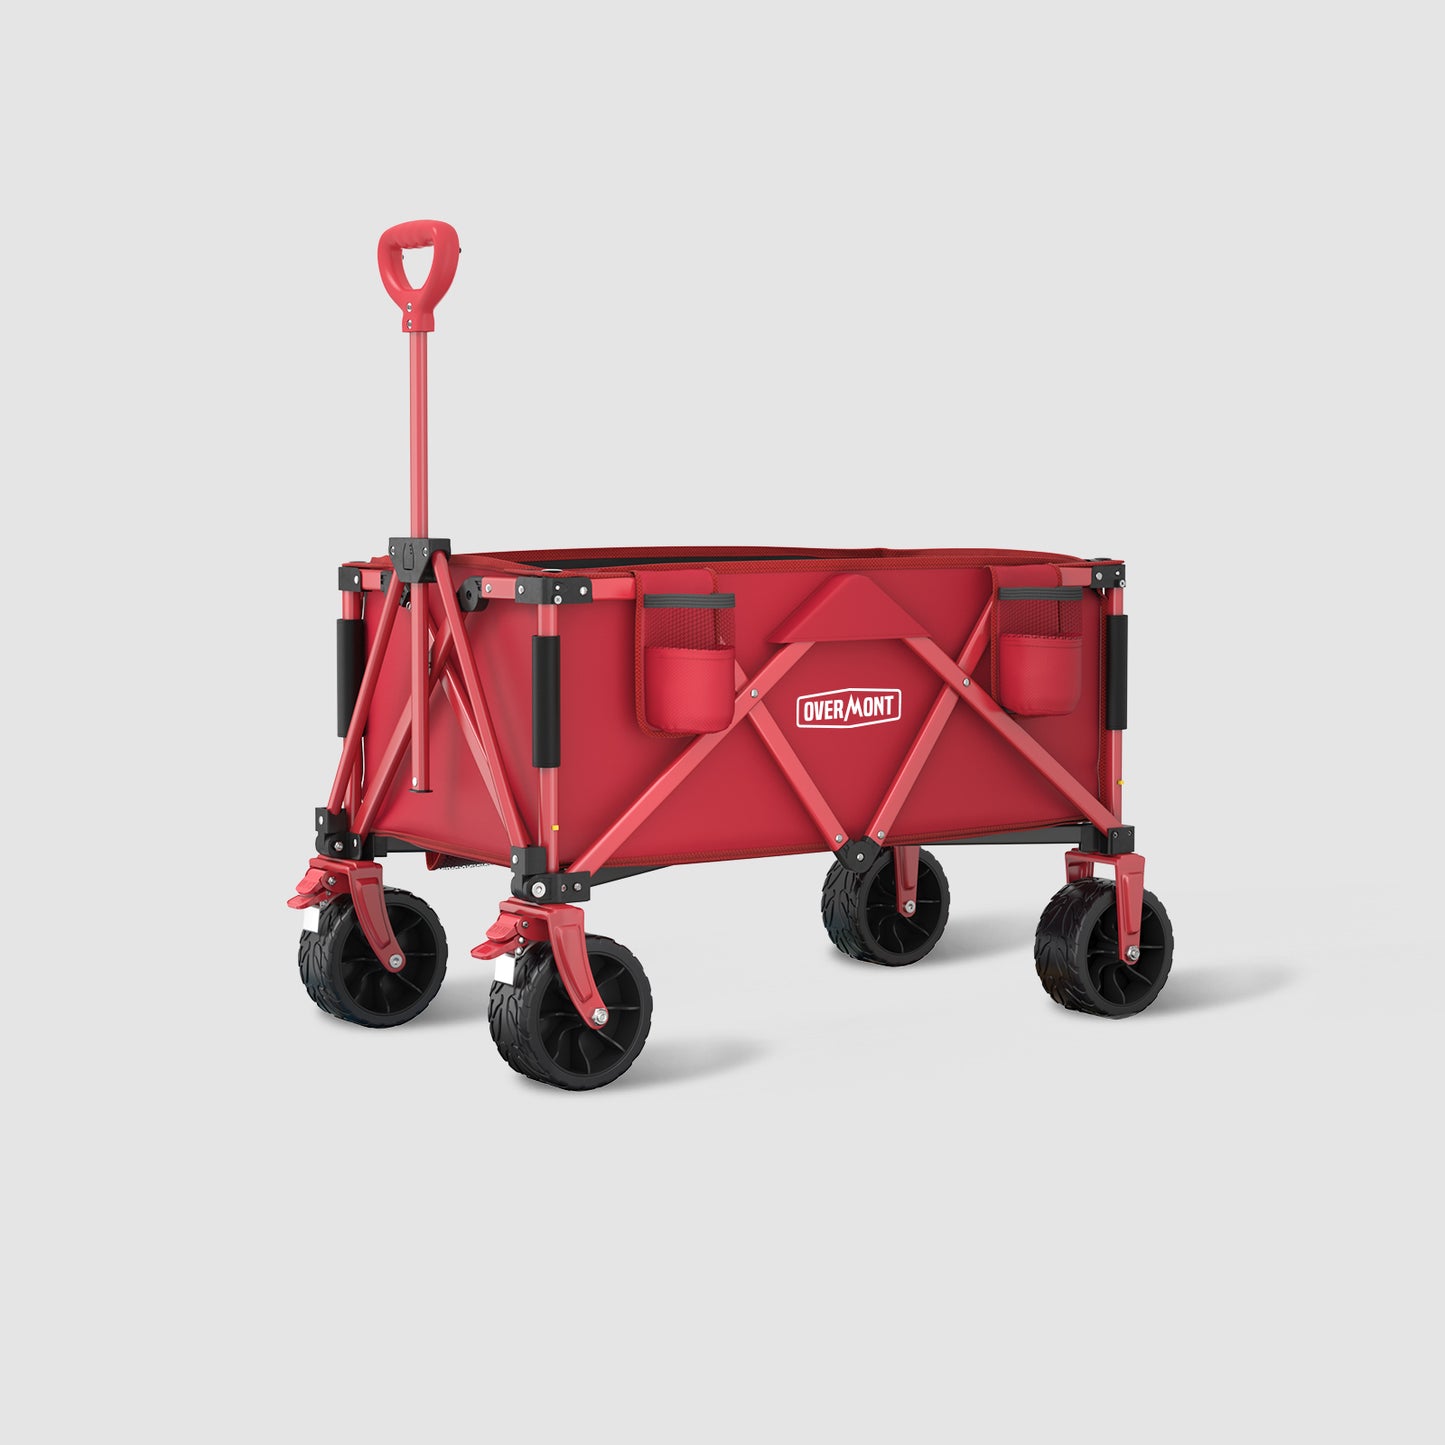 3.2 In wheel red folding wagon